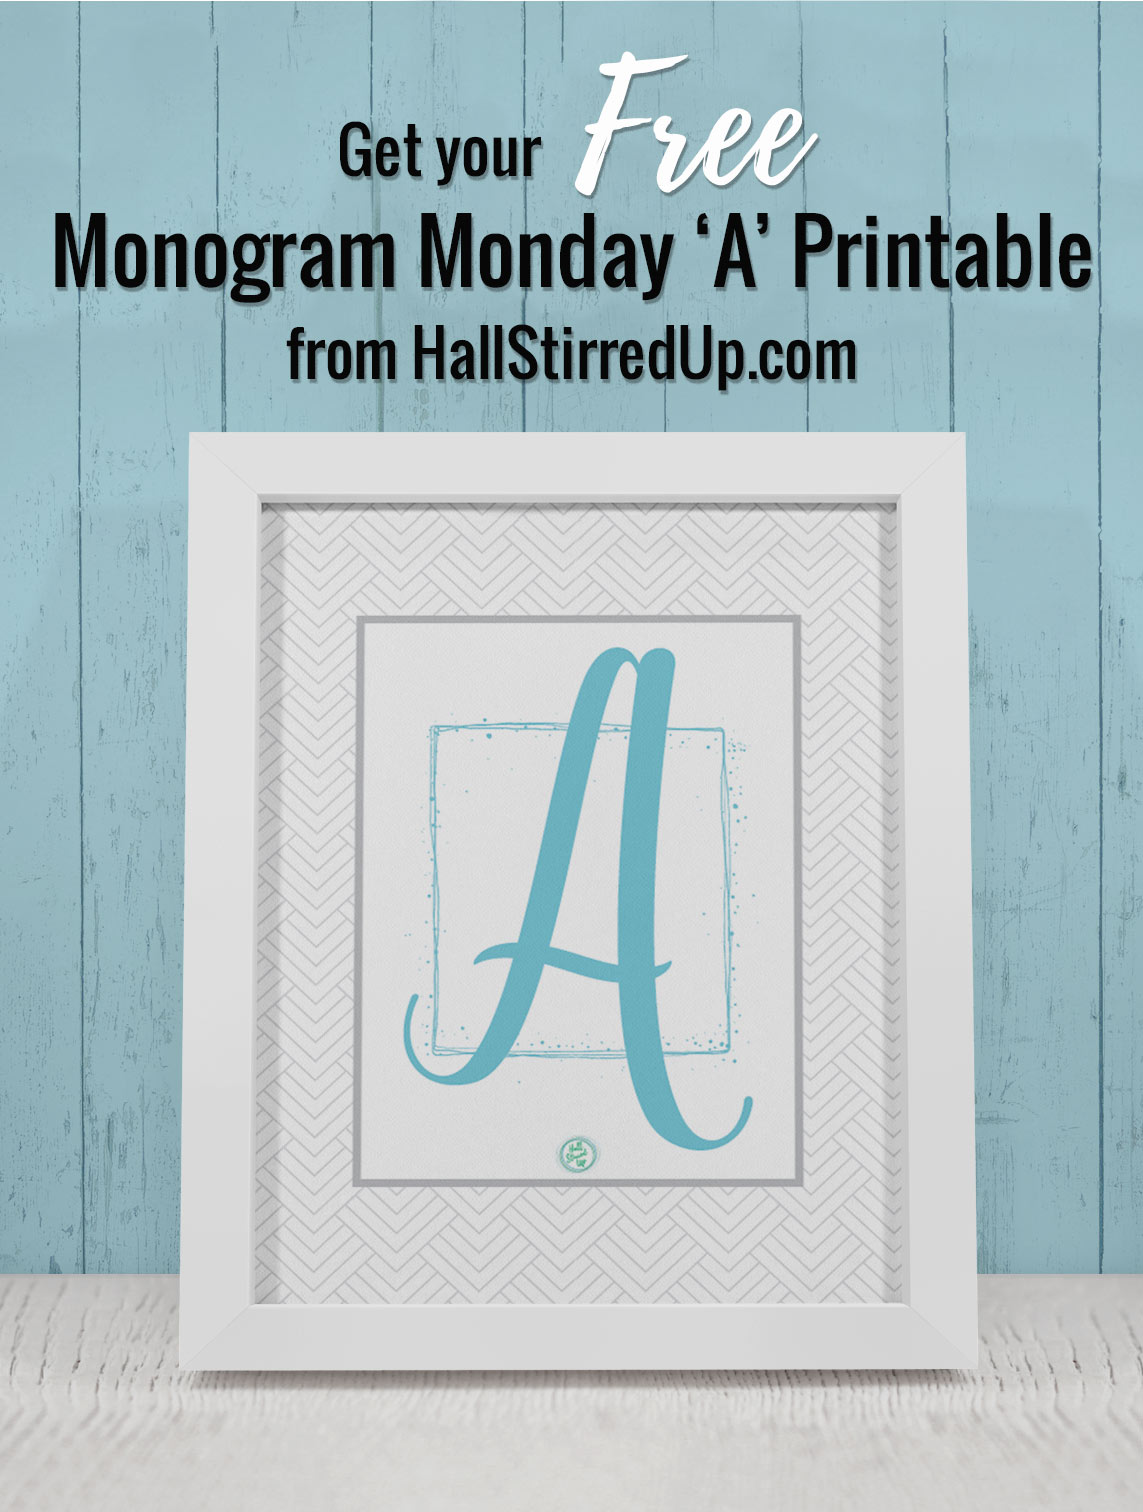 Monogram-Monday-A-Printable